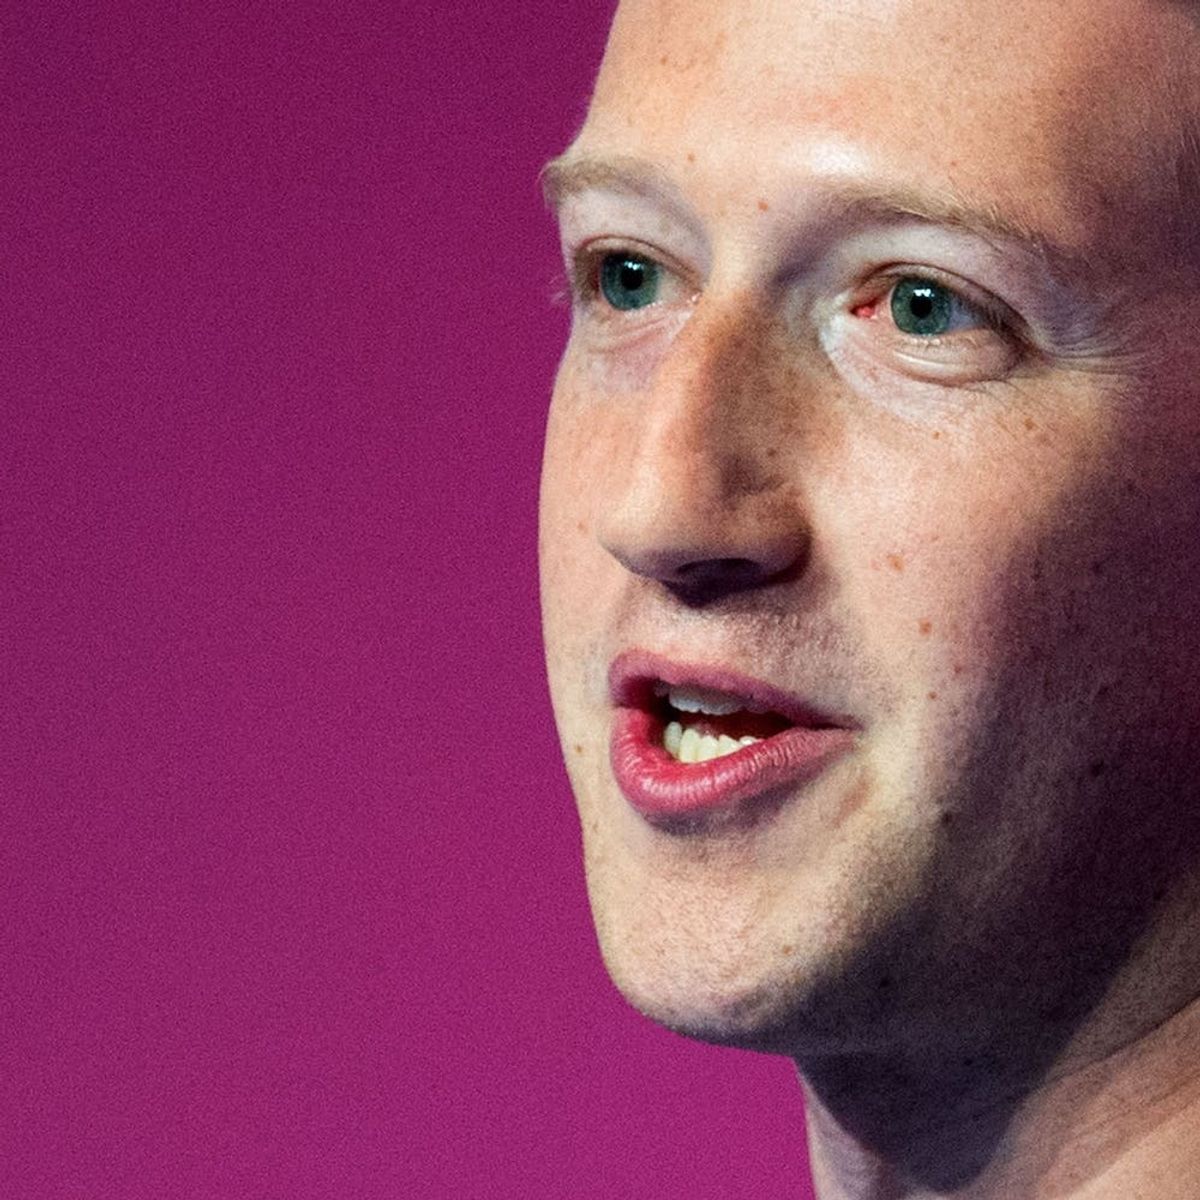 Facebook CEO Mark Zuckerberg Has FINALLY Commented on the Cambridge Analytica Scandal